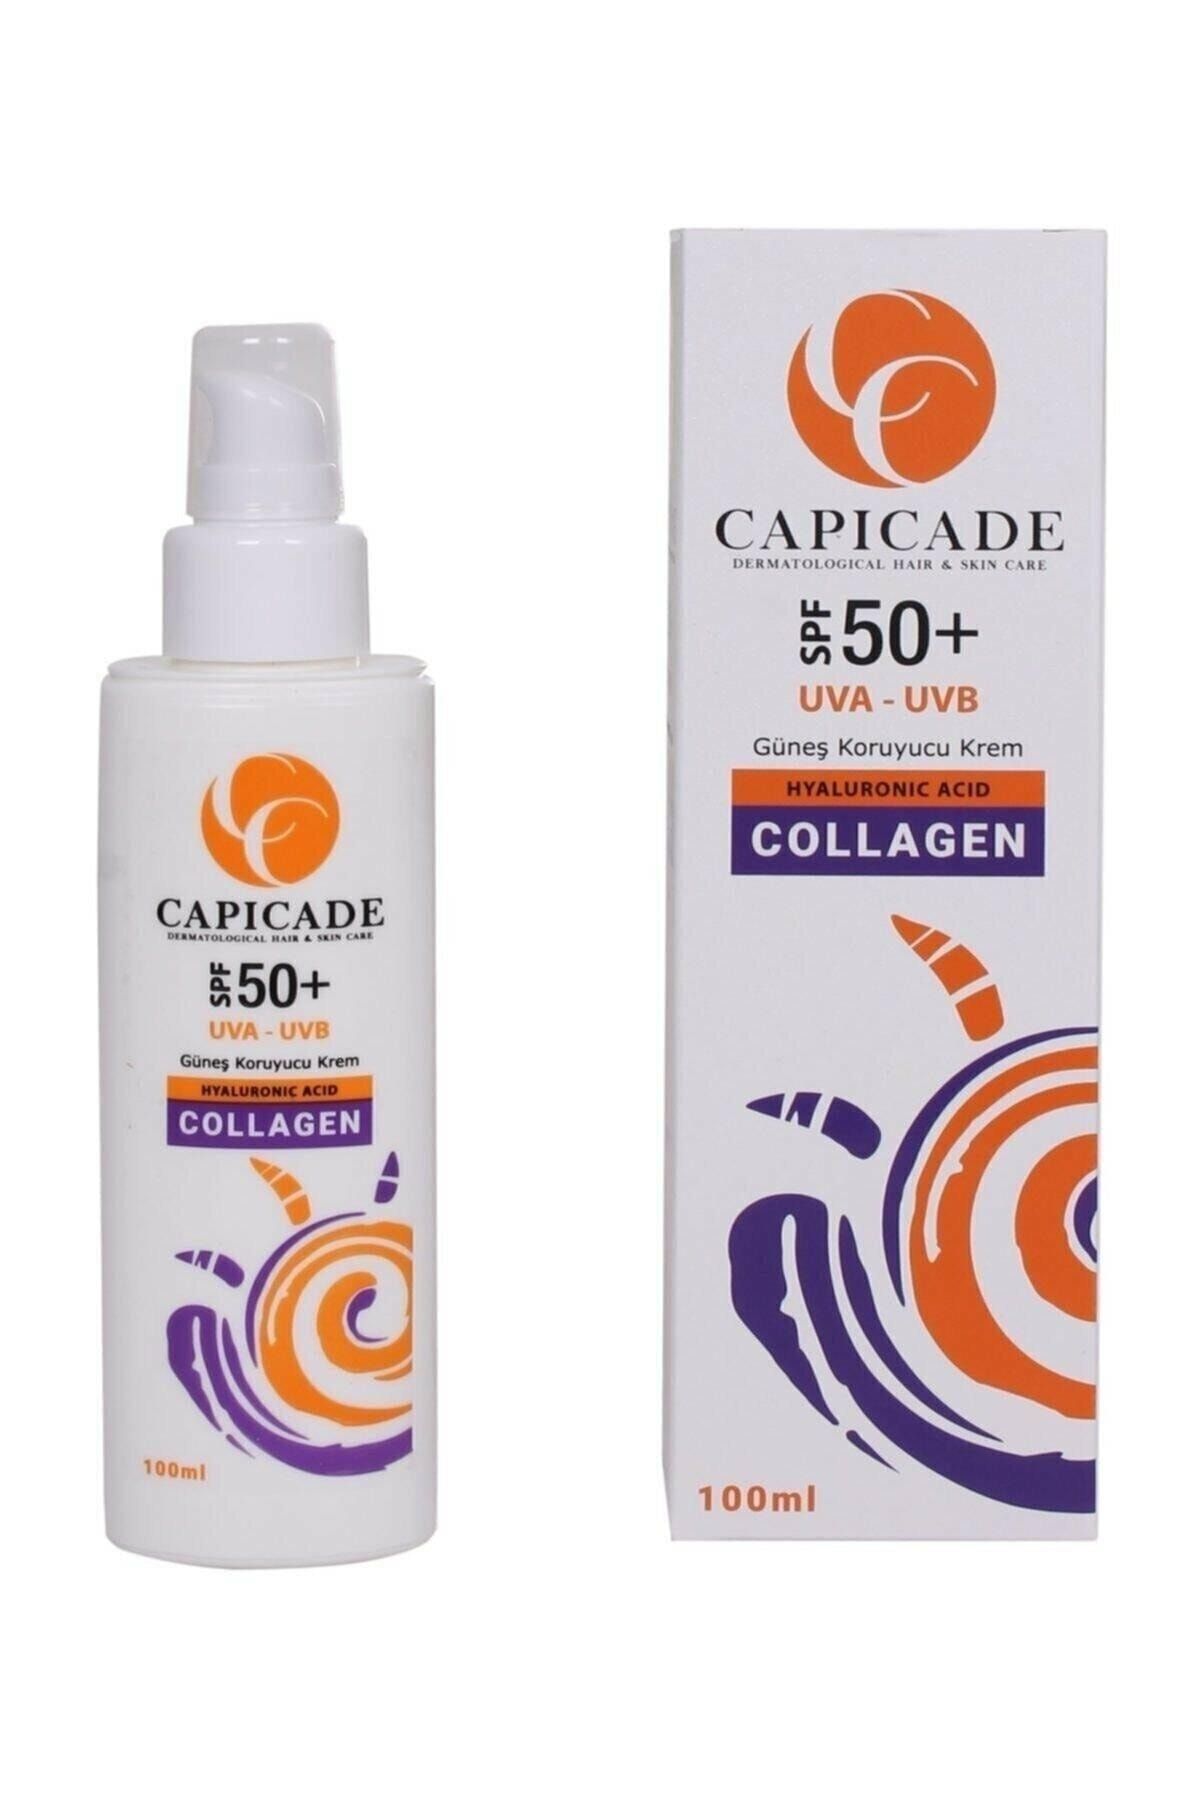 Capicade Spf 50 Collagen 100ml Hyaluronic Acid